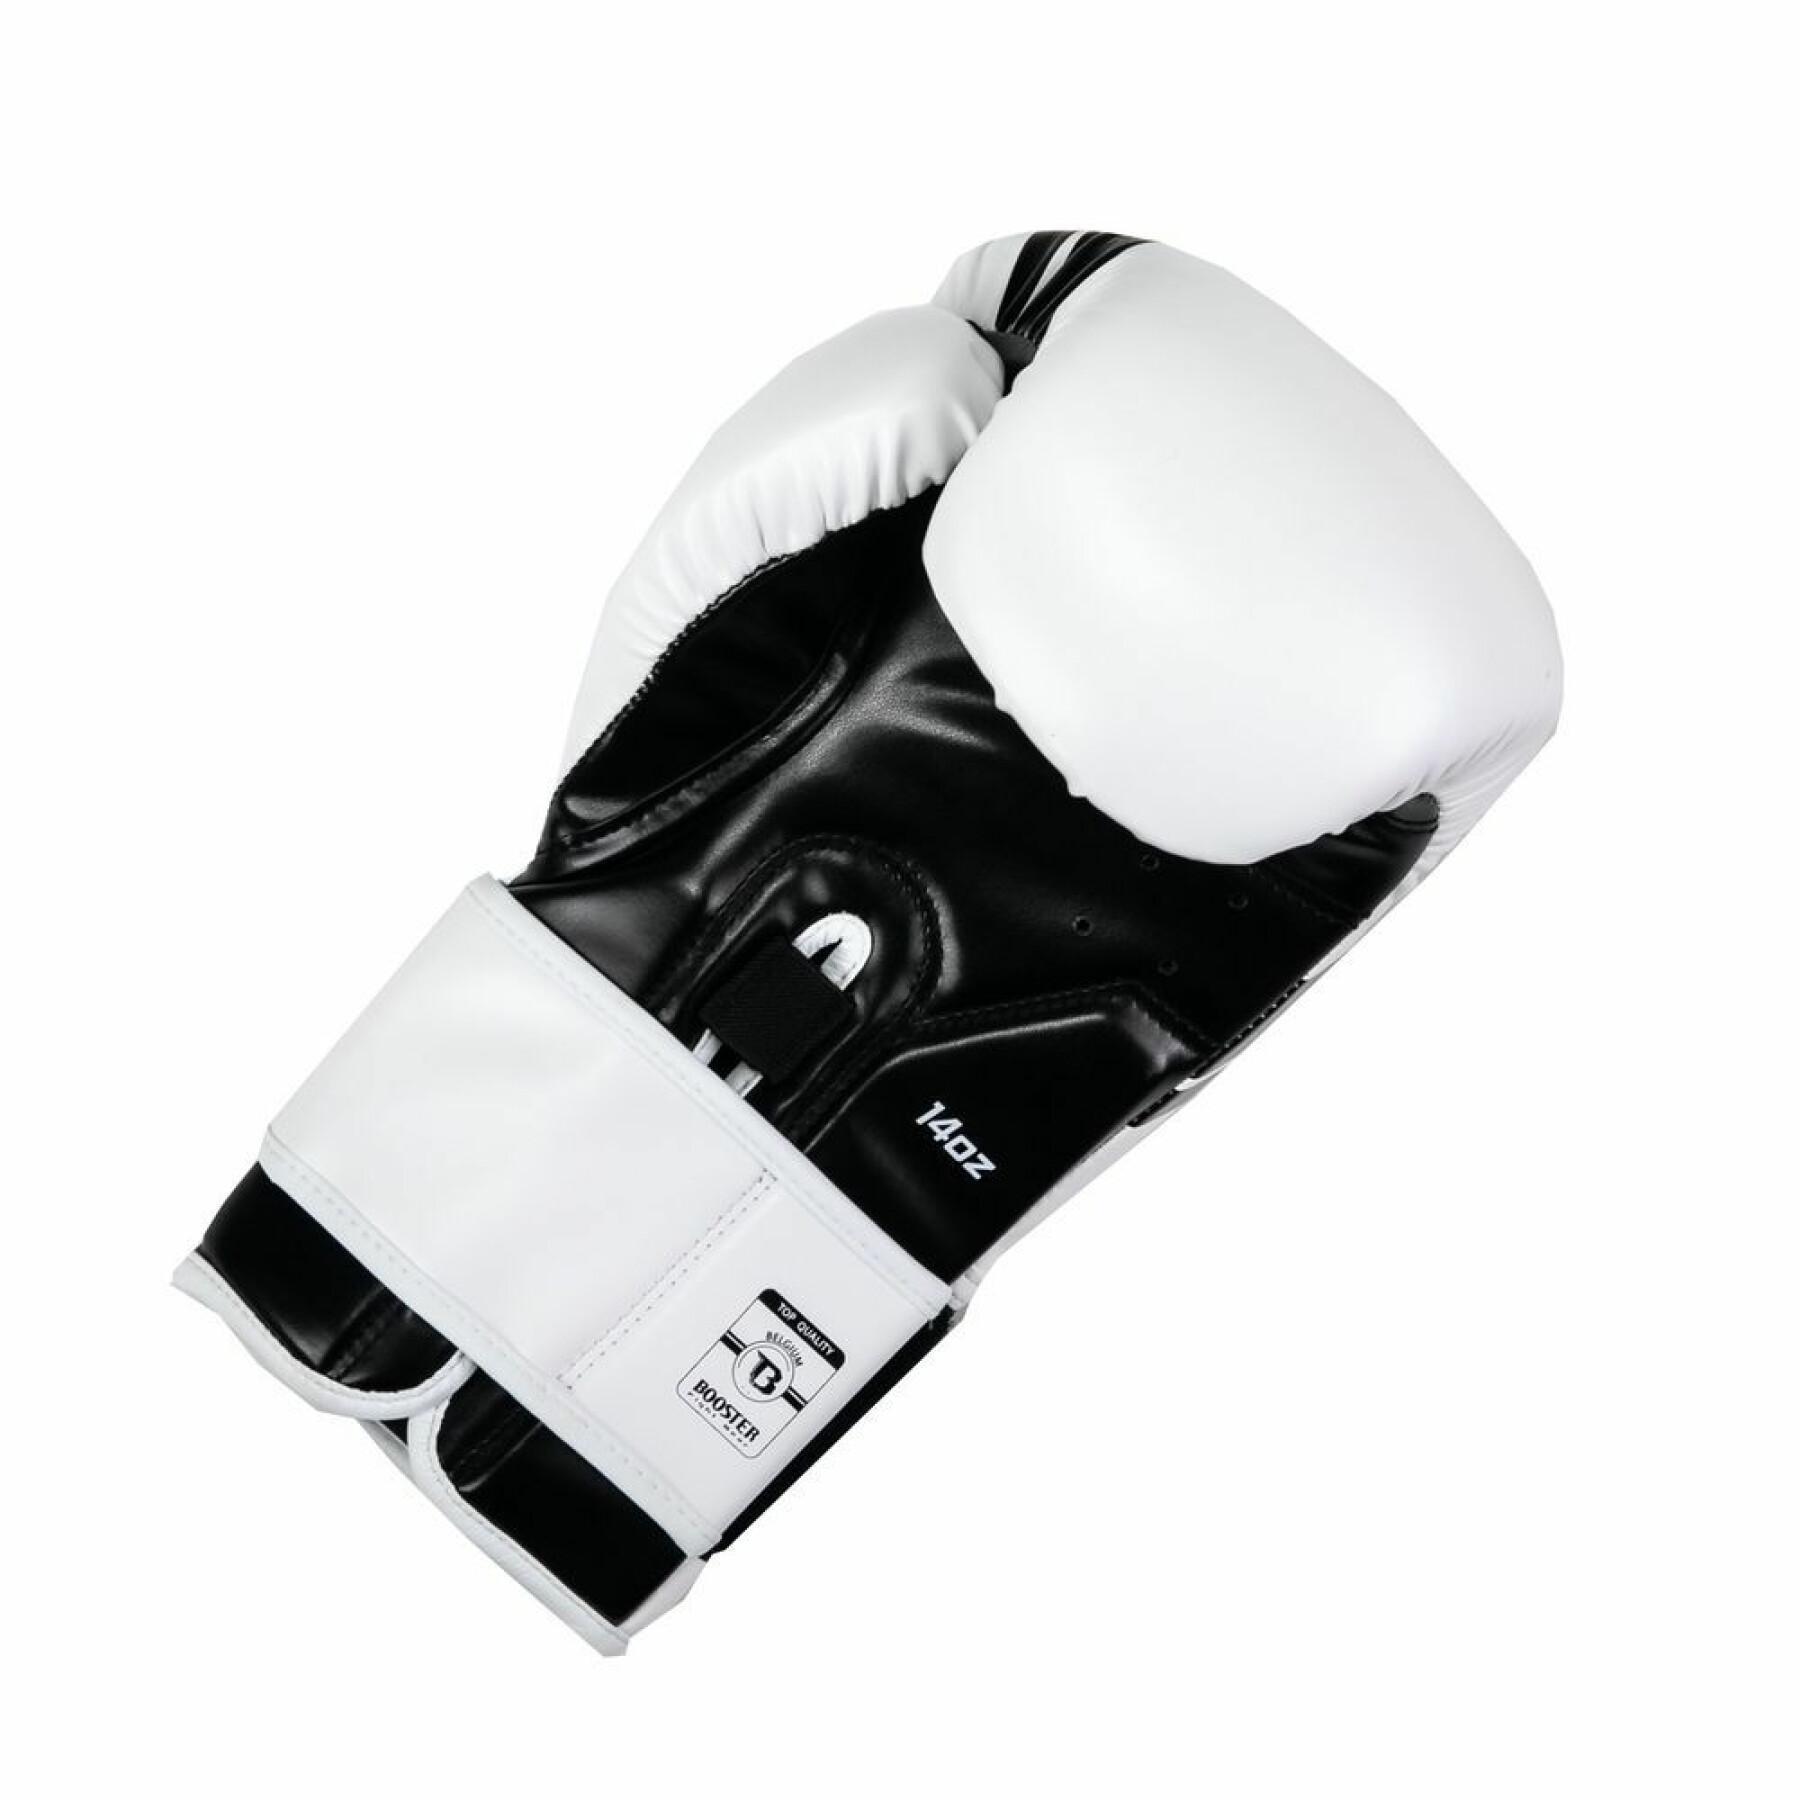 Rękawice bokserskie Booster Fight Gear Bg Premium Striker 2